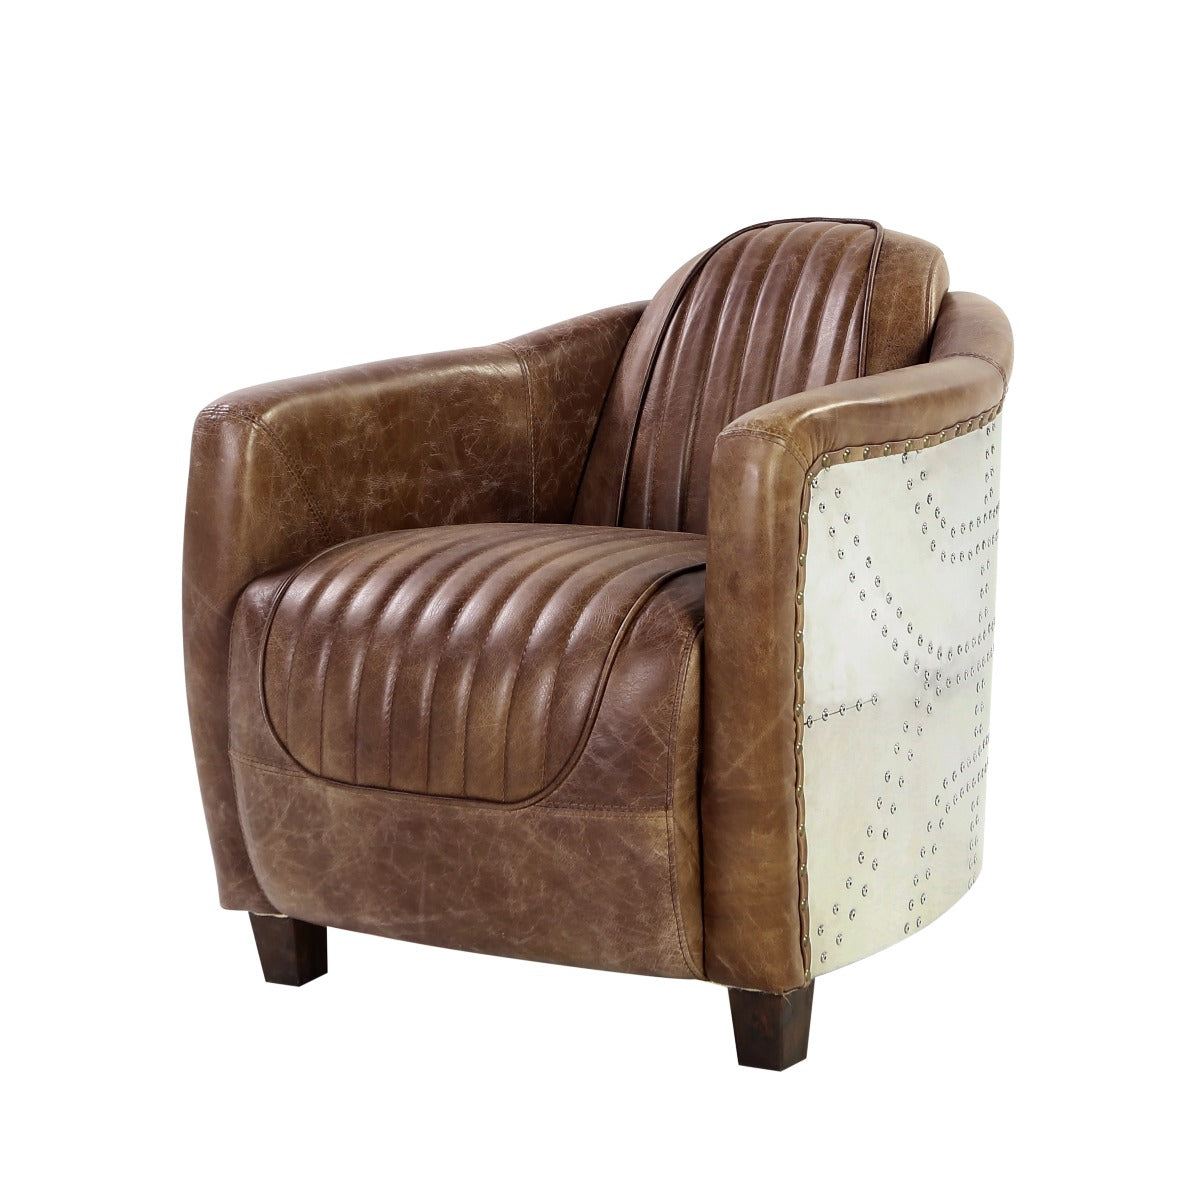 ACME Furniture TV & Media Units - Brancaster Chair, Retro Brown Top Grain Leather & Aluminum